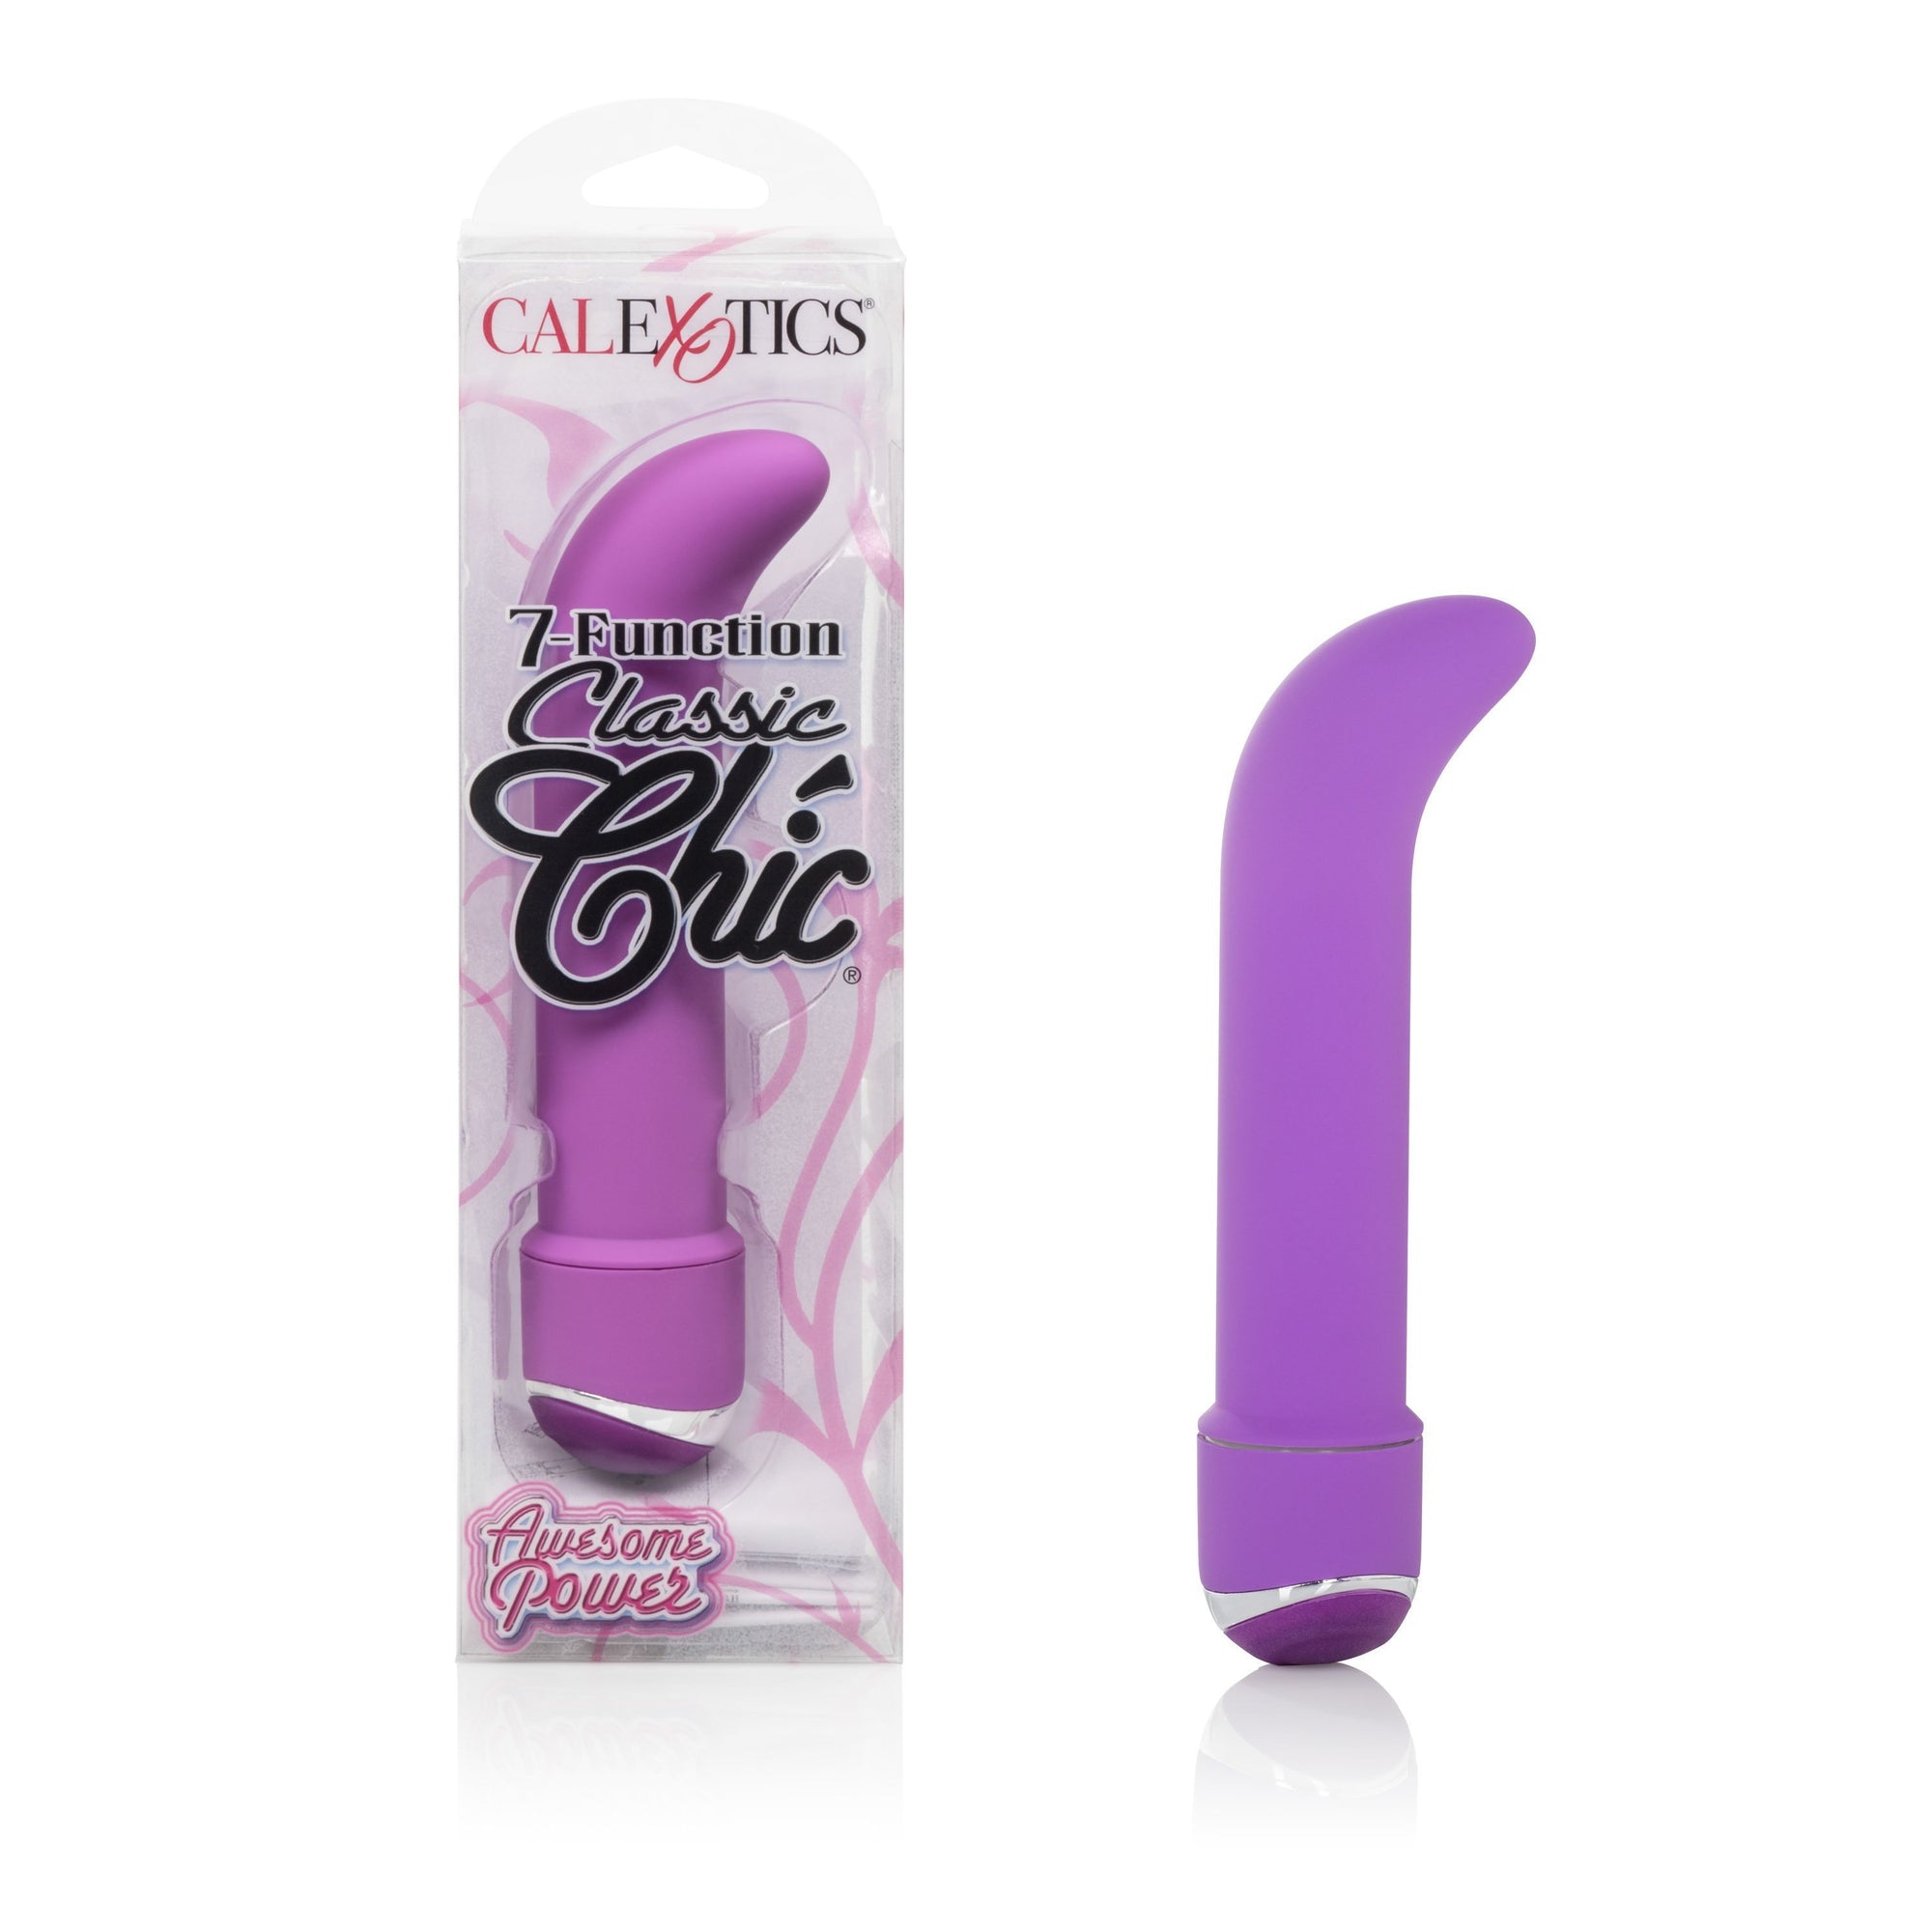 California Exotics - 7 Function Classic Chic Mini G Spot Vibrator (Purple) G Spot Dildo (Vibration) Non Rechargeable Durio Asia